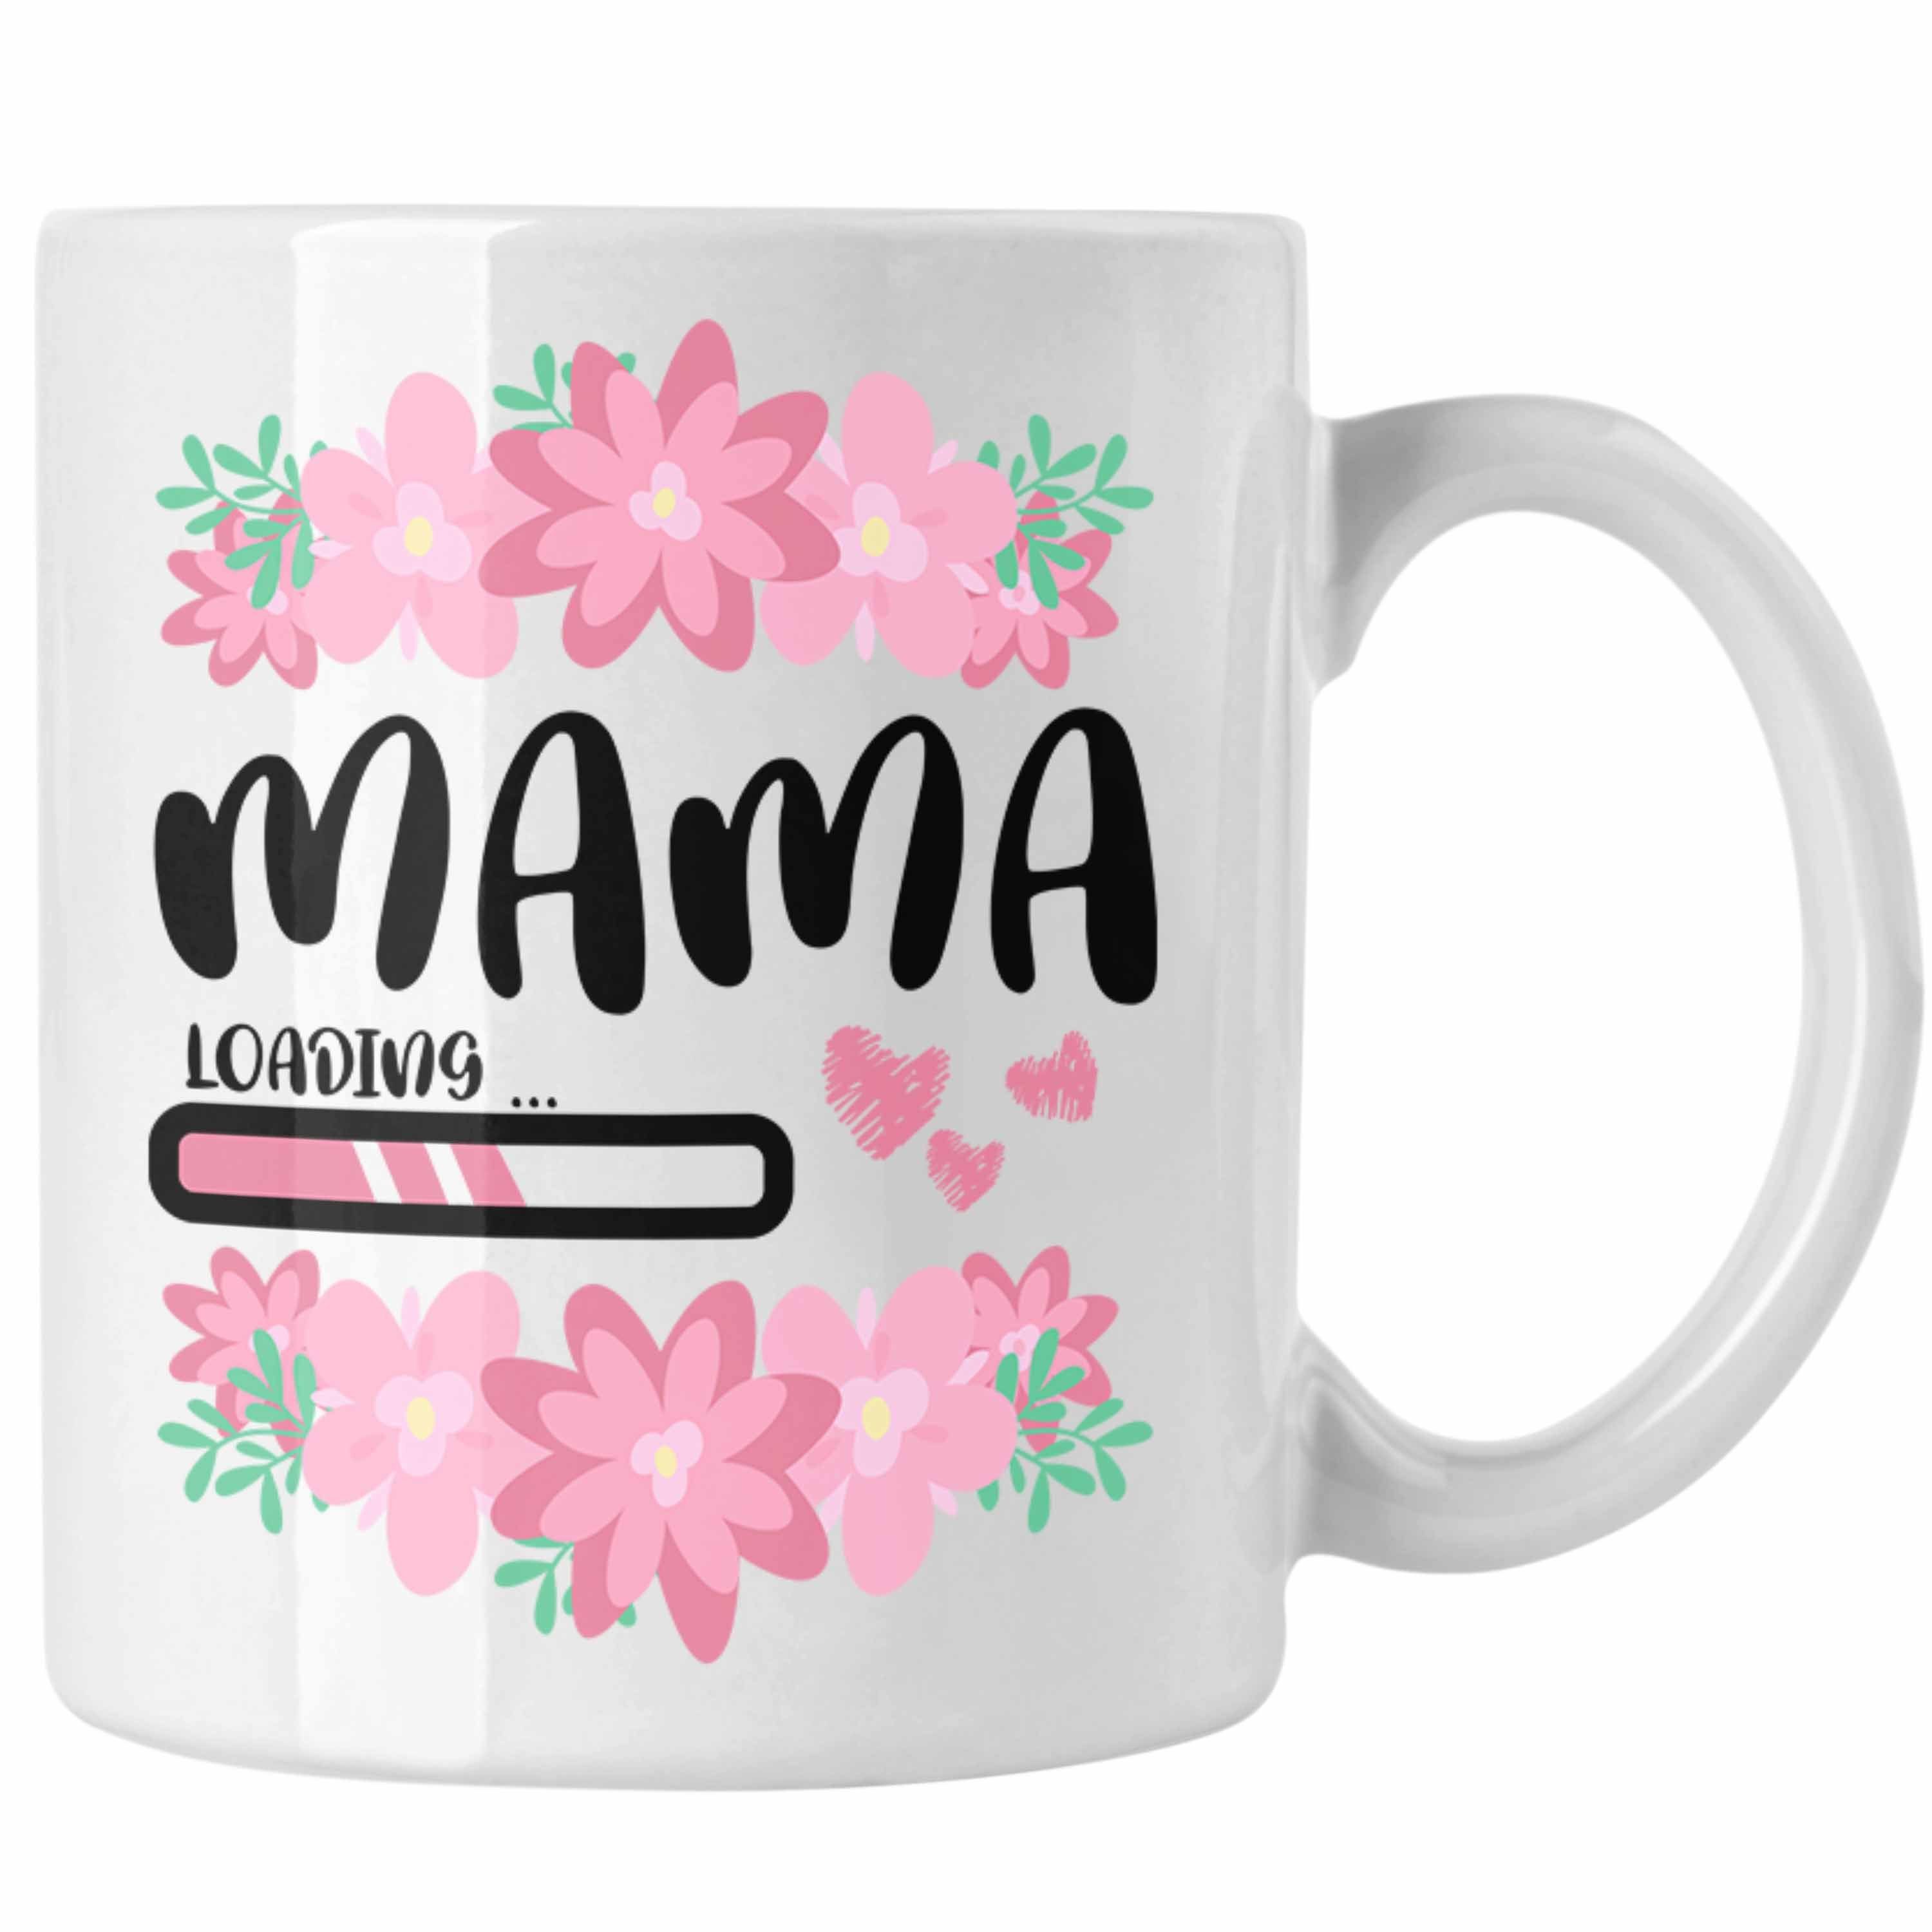 Baby Weiss - Tasse Kaffeetasse Mama Rosa Loading Trendation Geschenk Tasse Schwangerschaft Schwangerschaftsankündigung Trendation